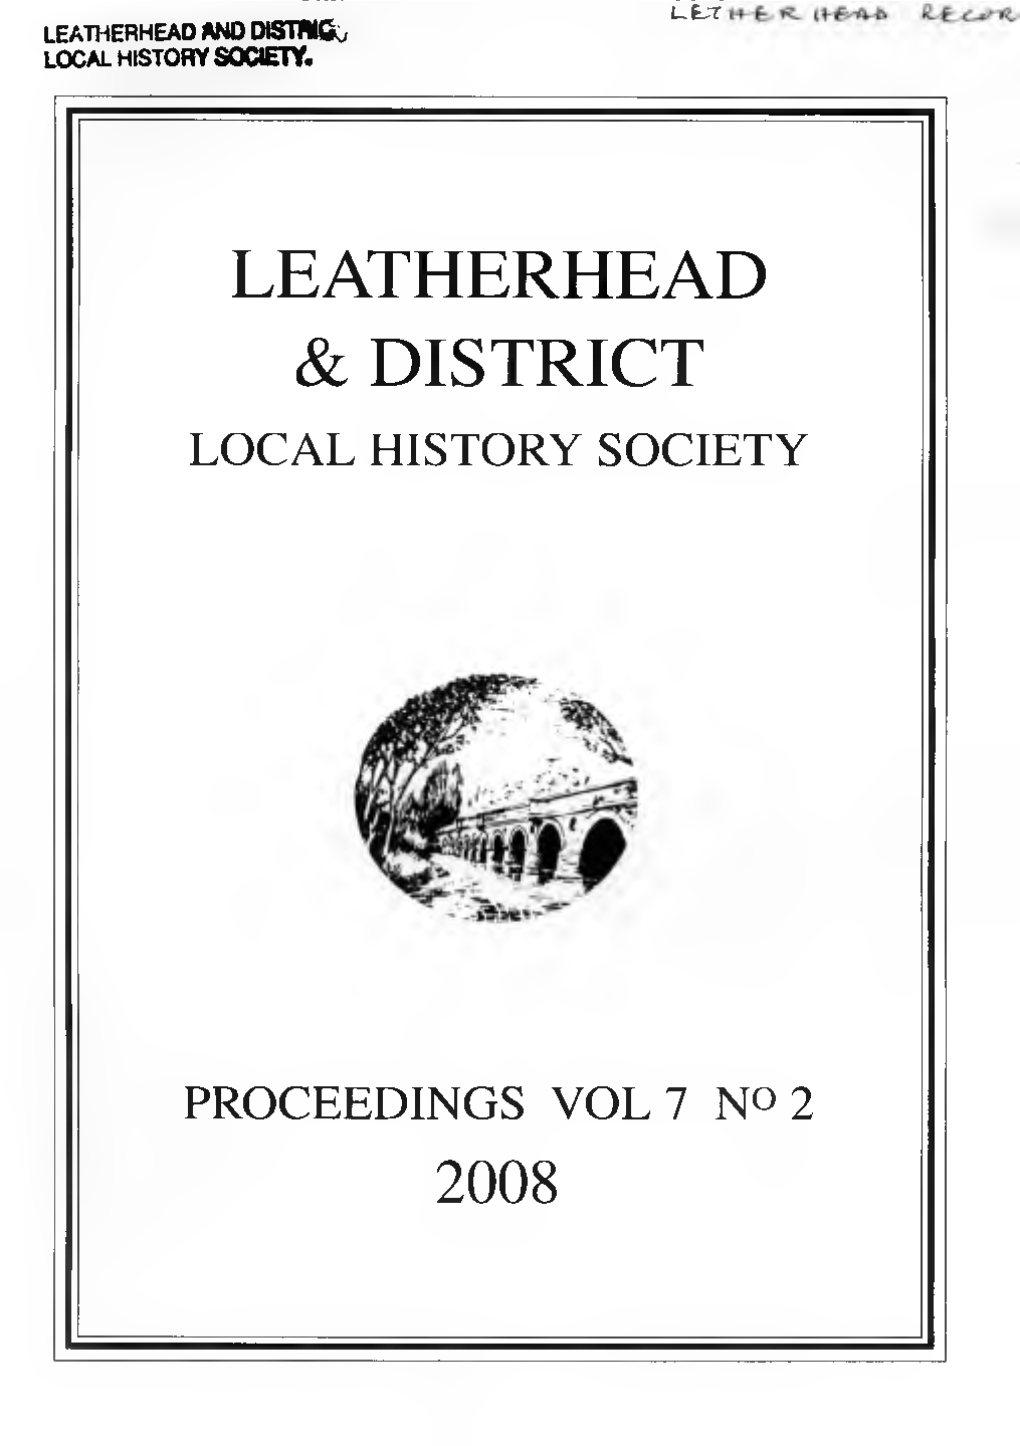 Leatherhead & District